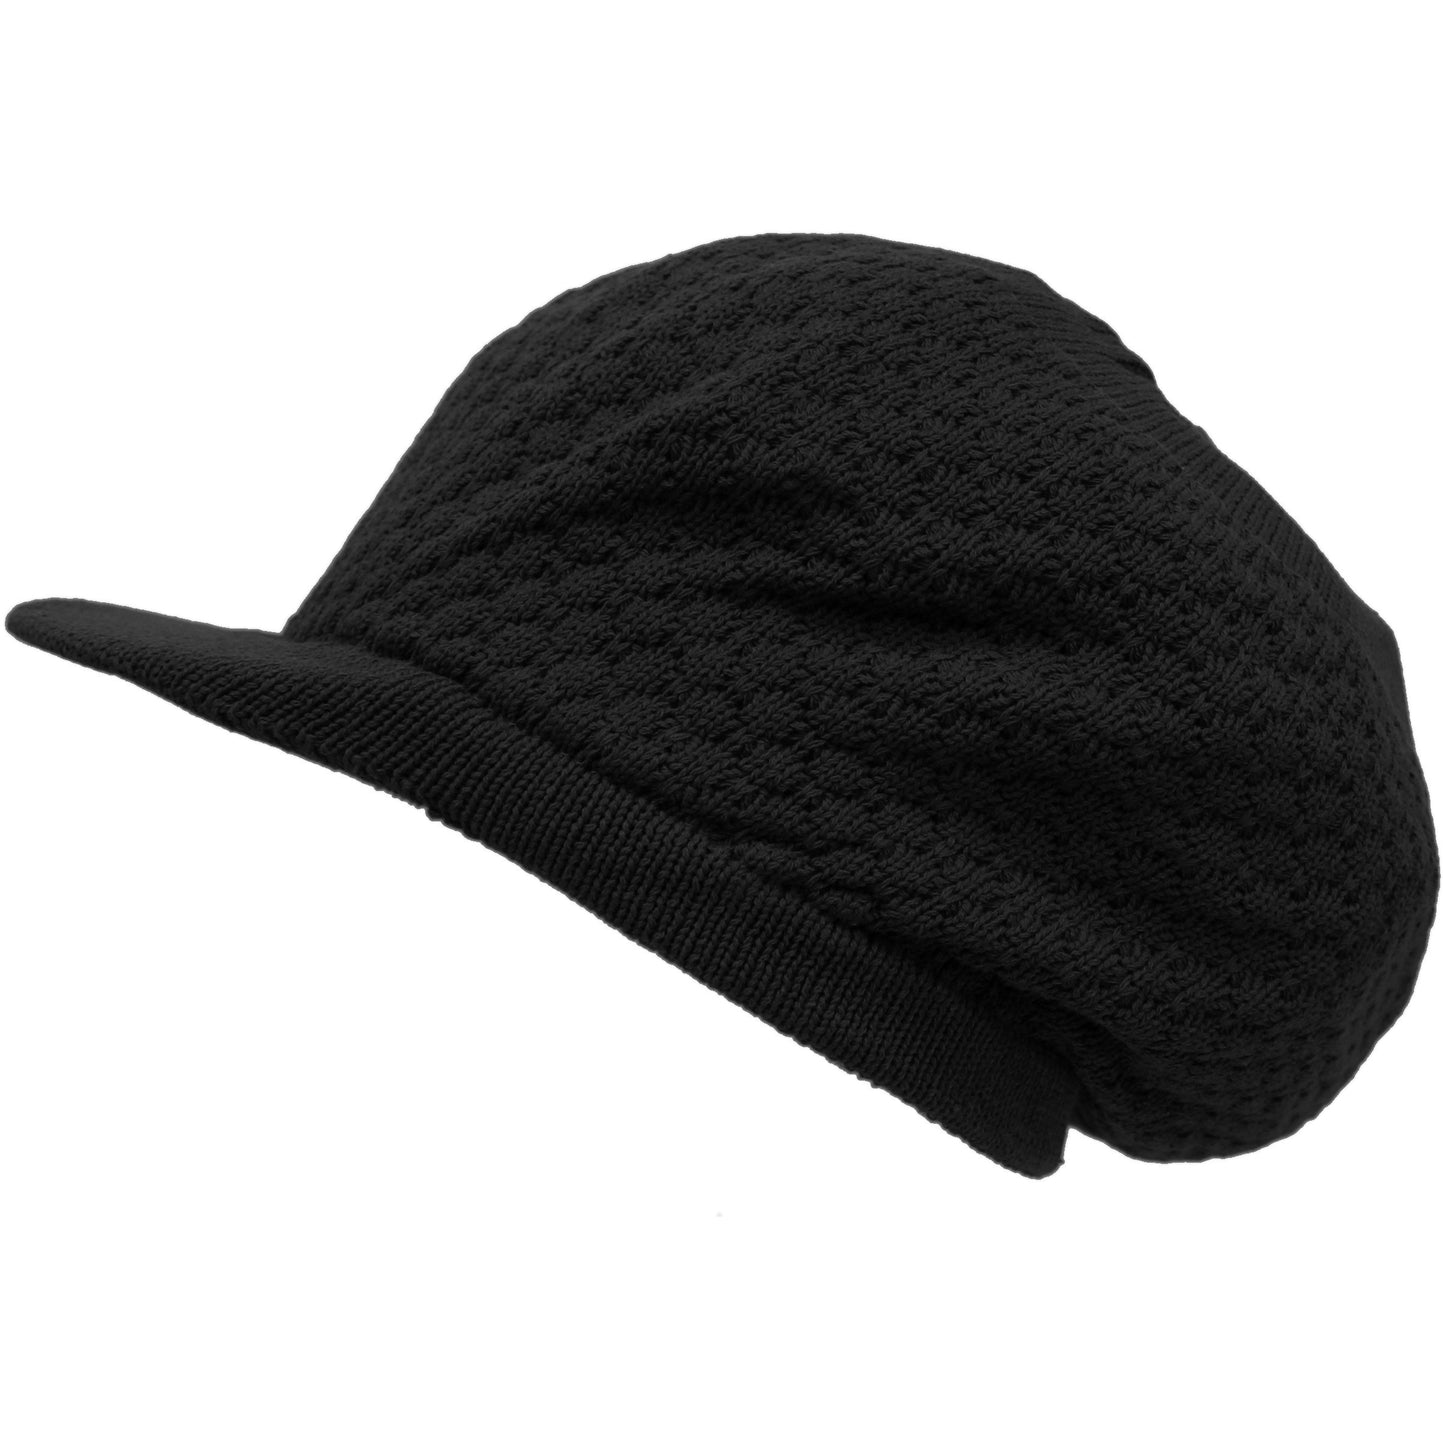 Shoe String King SSK Rasta Knit Tam Hat Dreadlock Cap (Large Round Solid Black w/Brim)